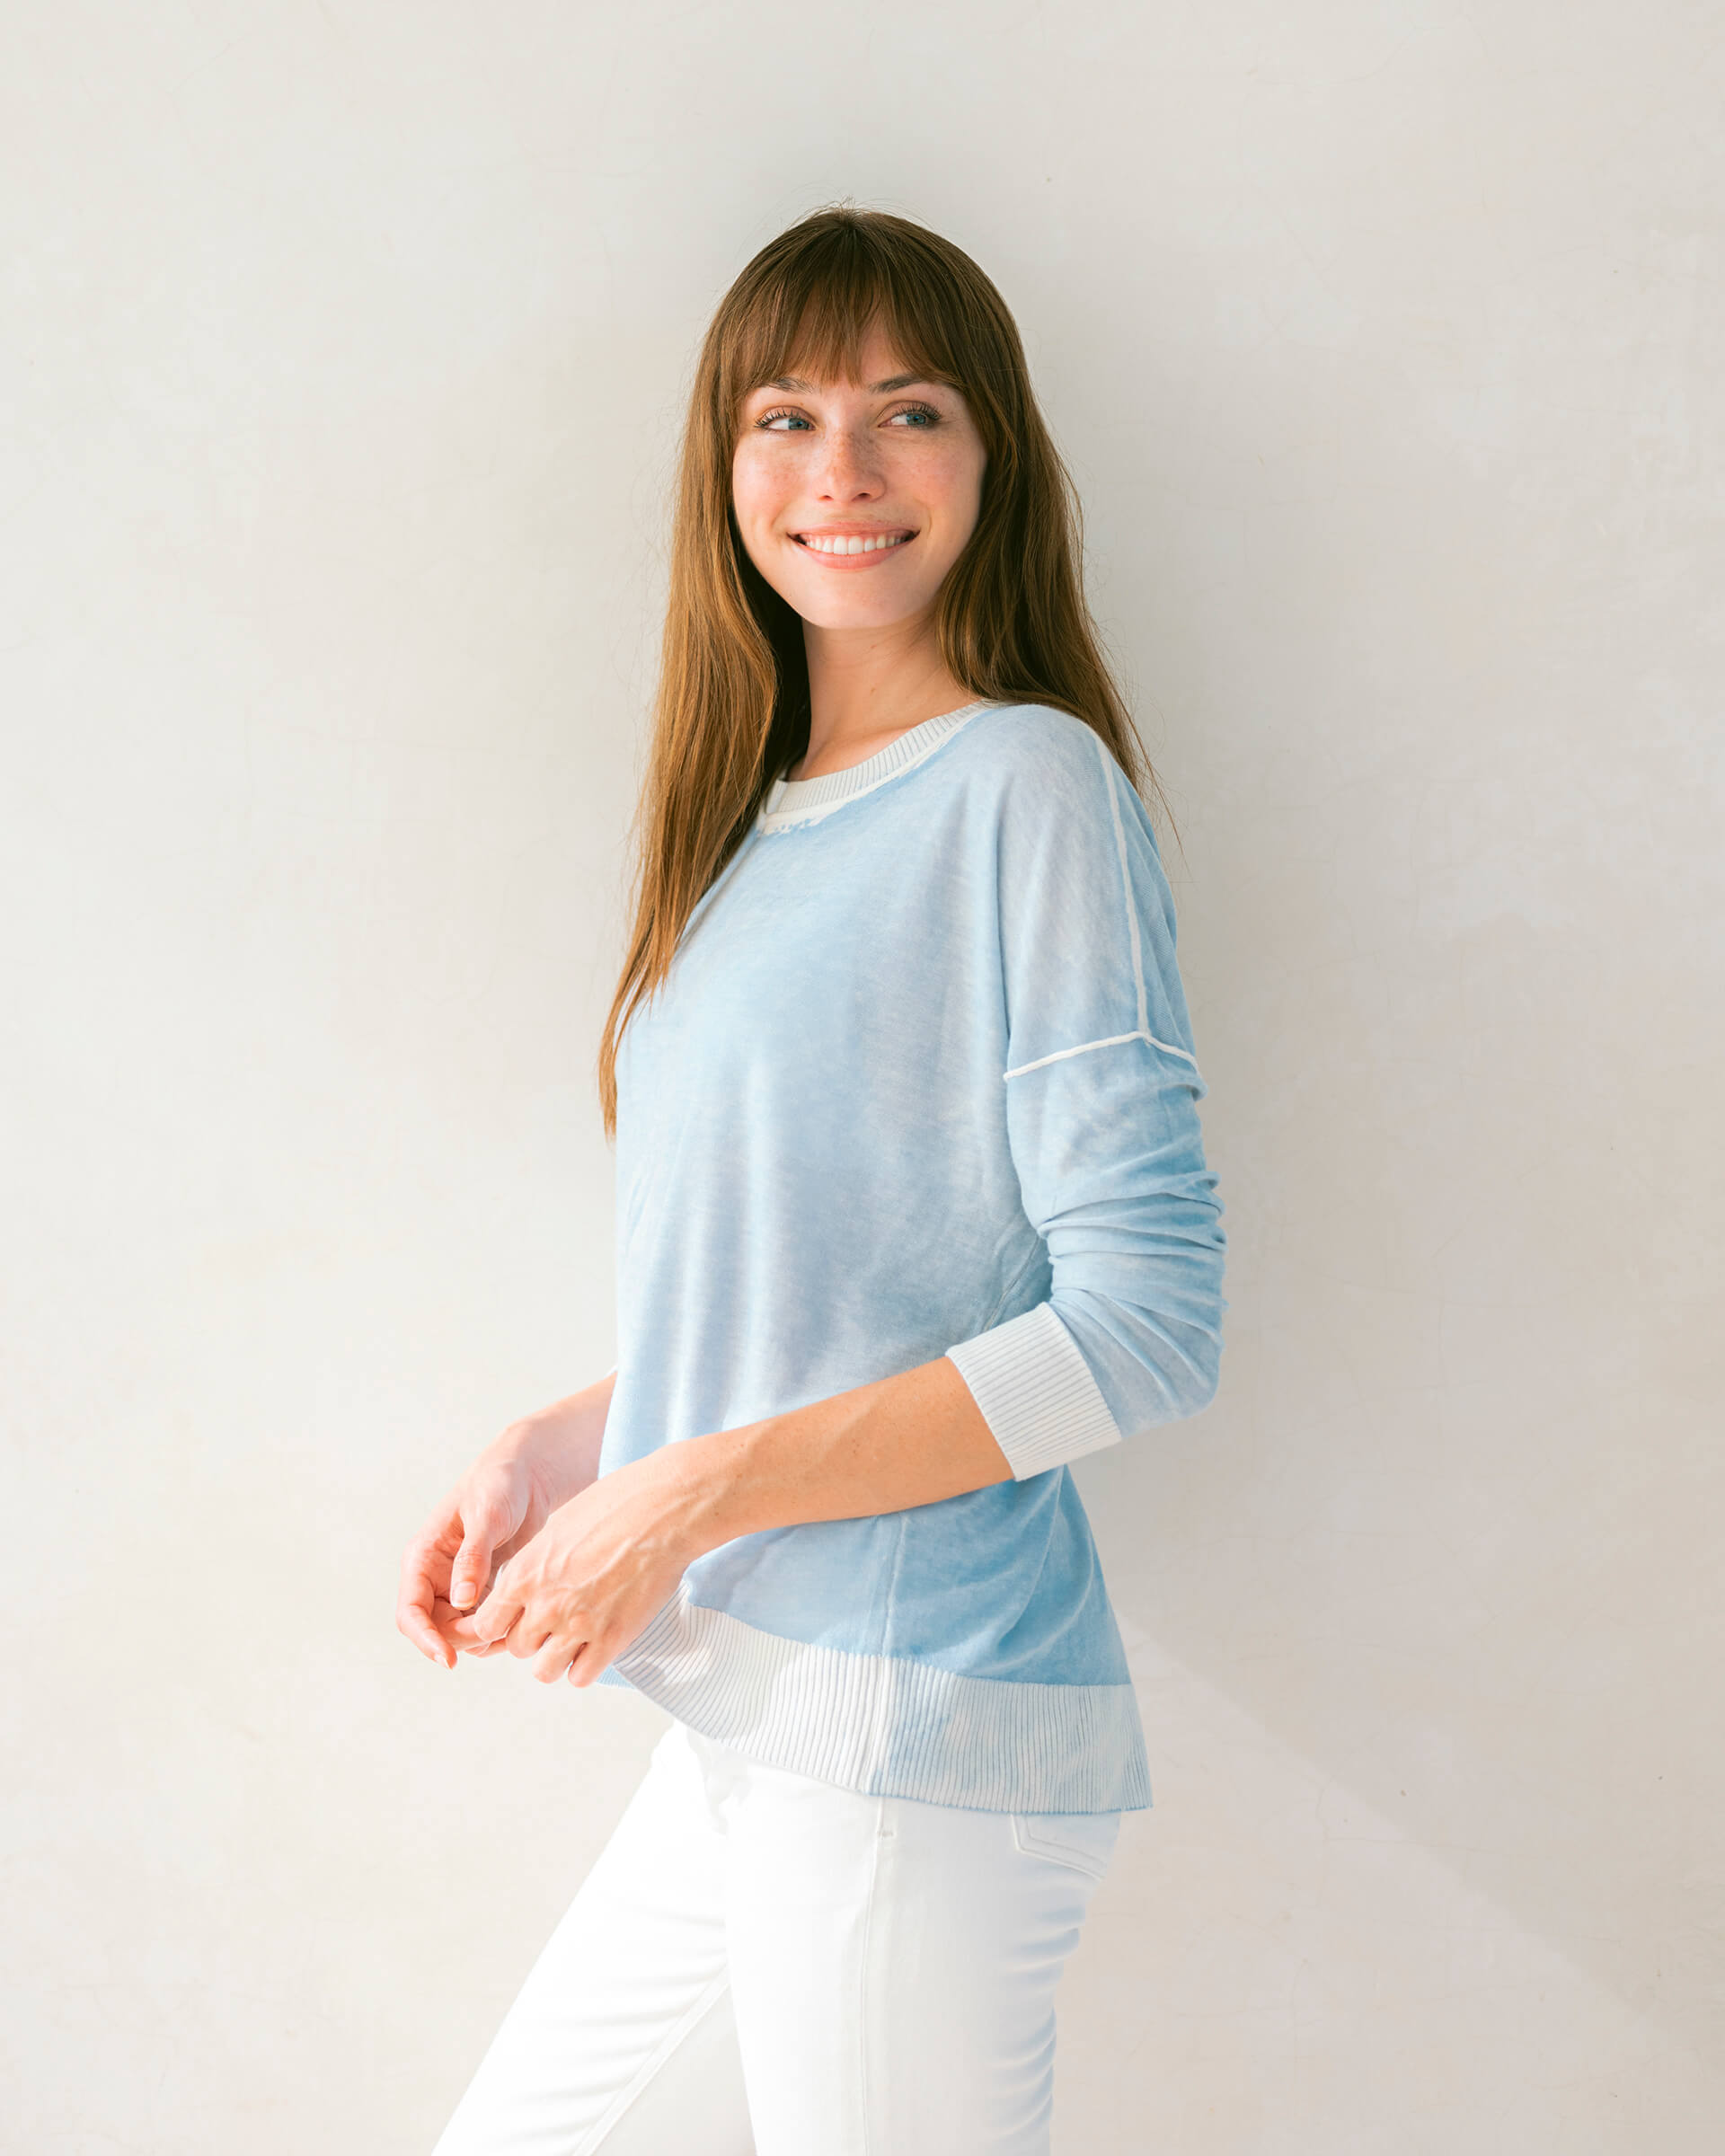 brunette female wearing light blue sweater standing sideways in front of a white wall 